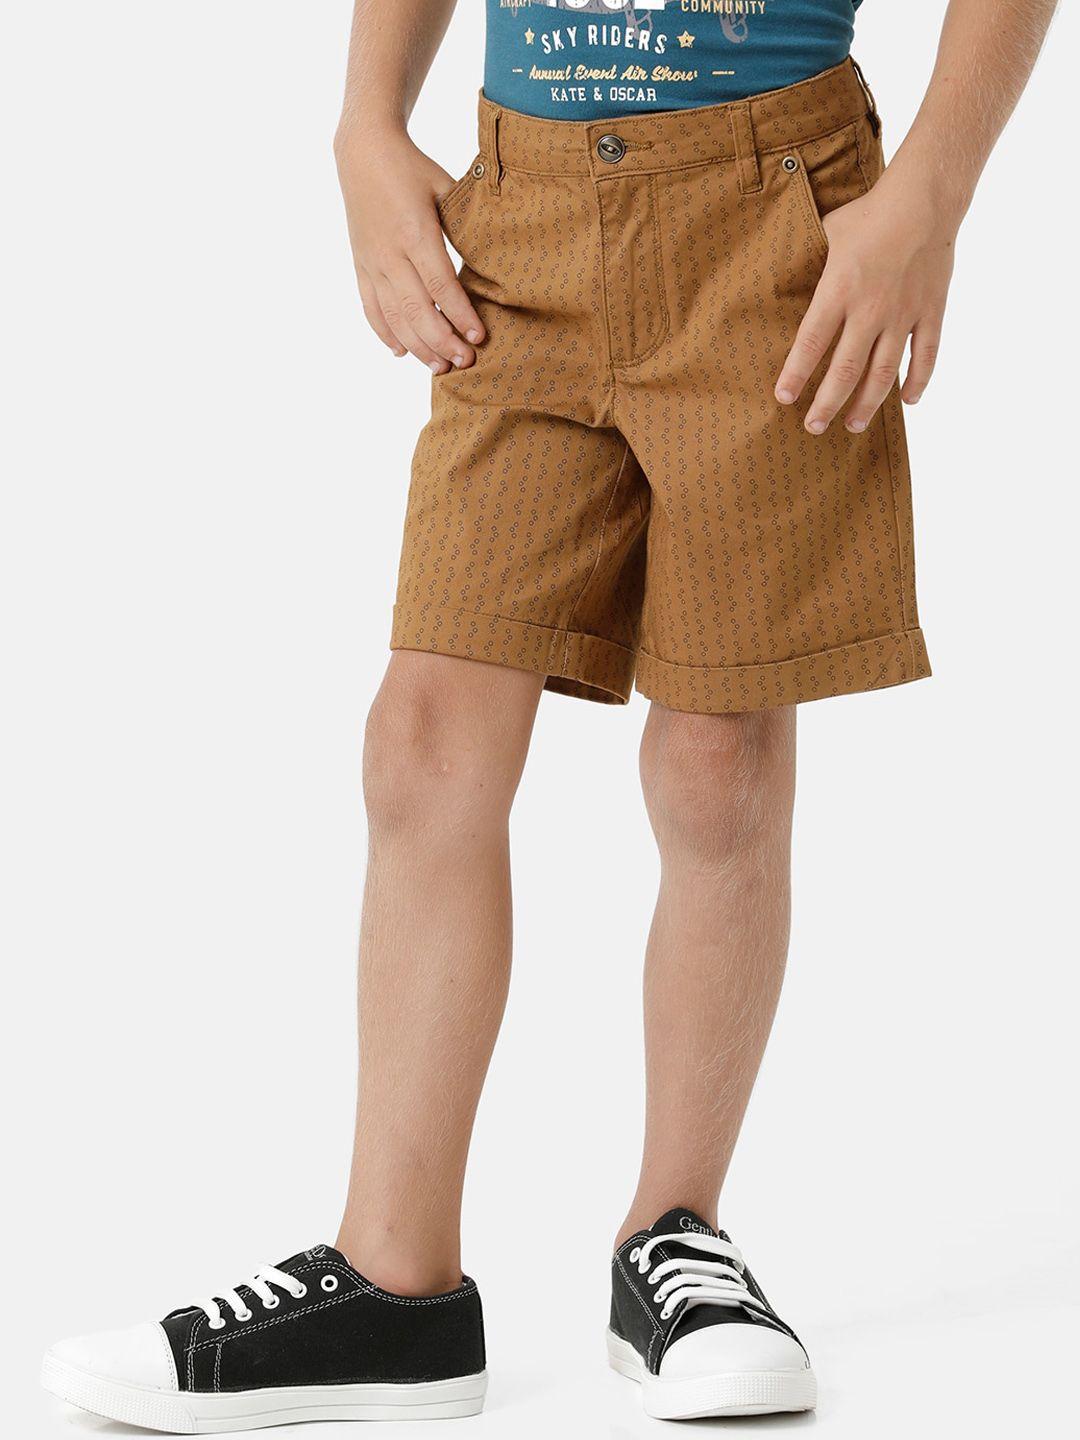 kate & oscar boys geometric printed cotton regular shorts